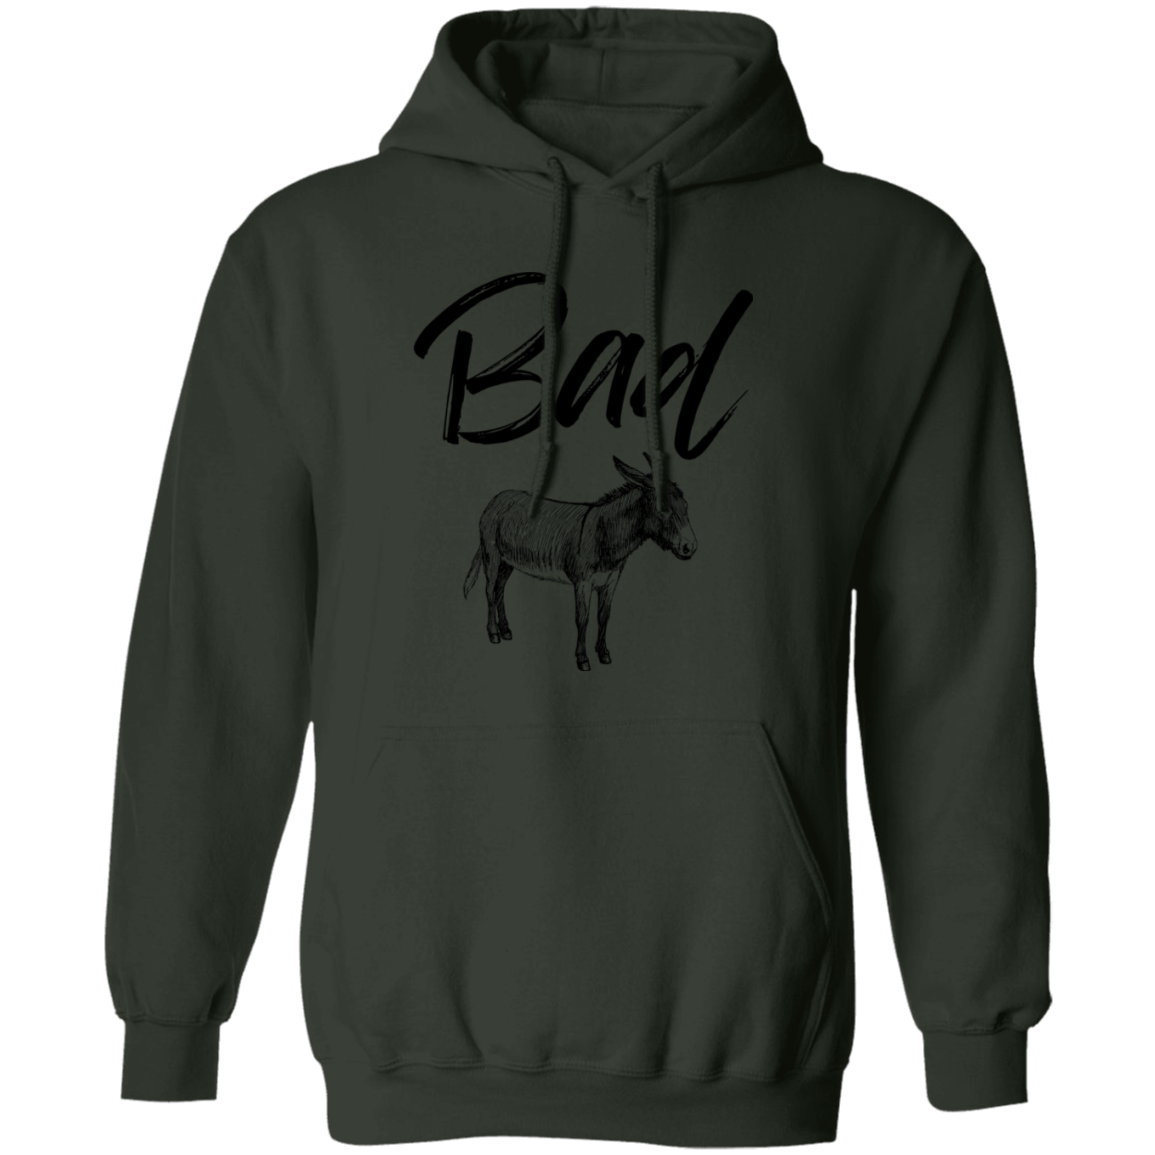 Badass Bad A$$ Hoodie, Funny Shirts